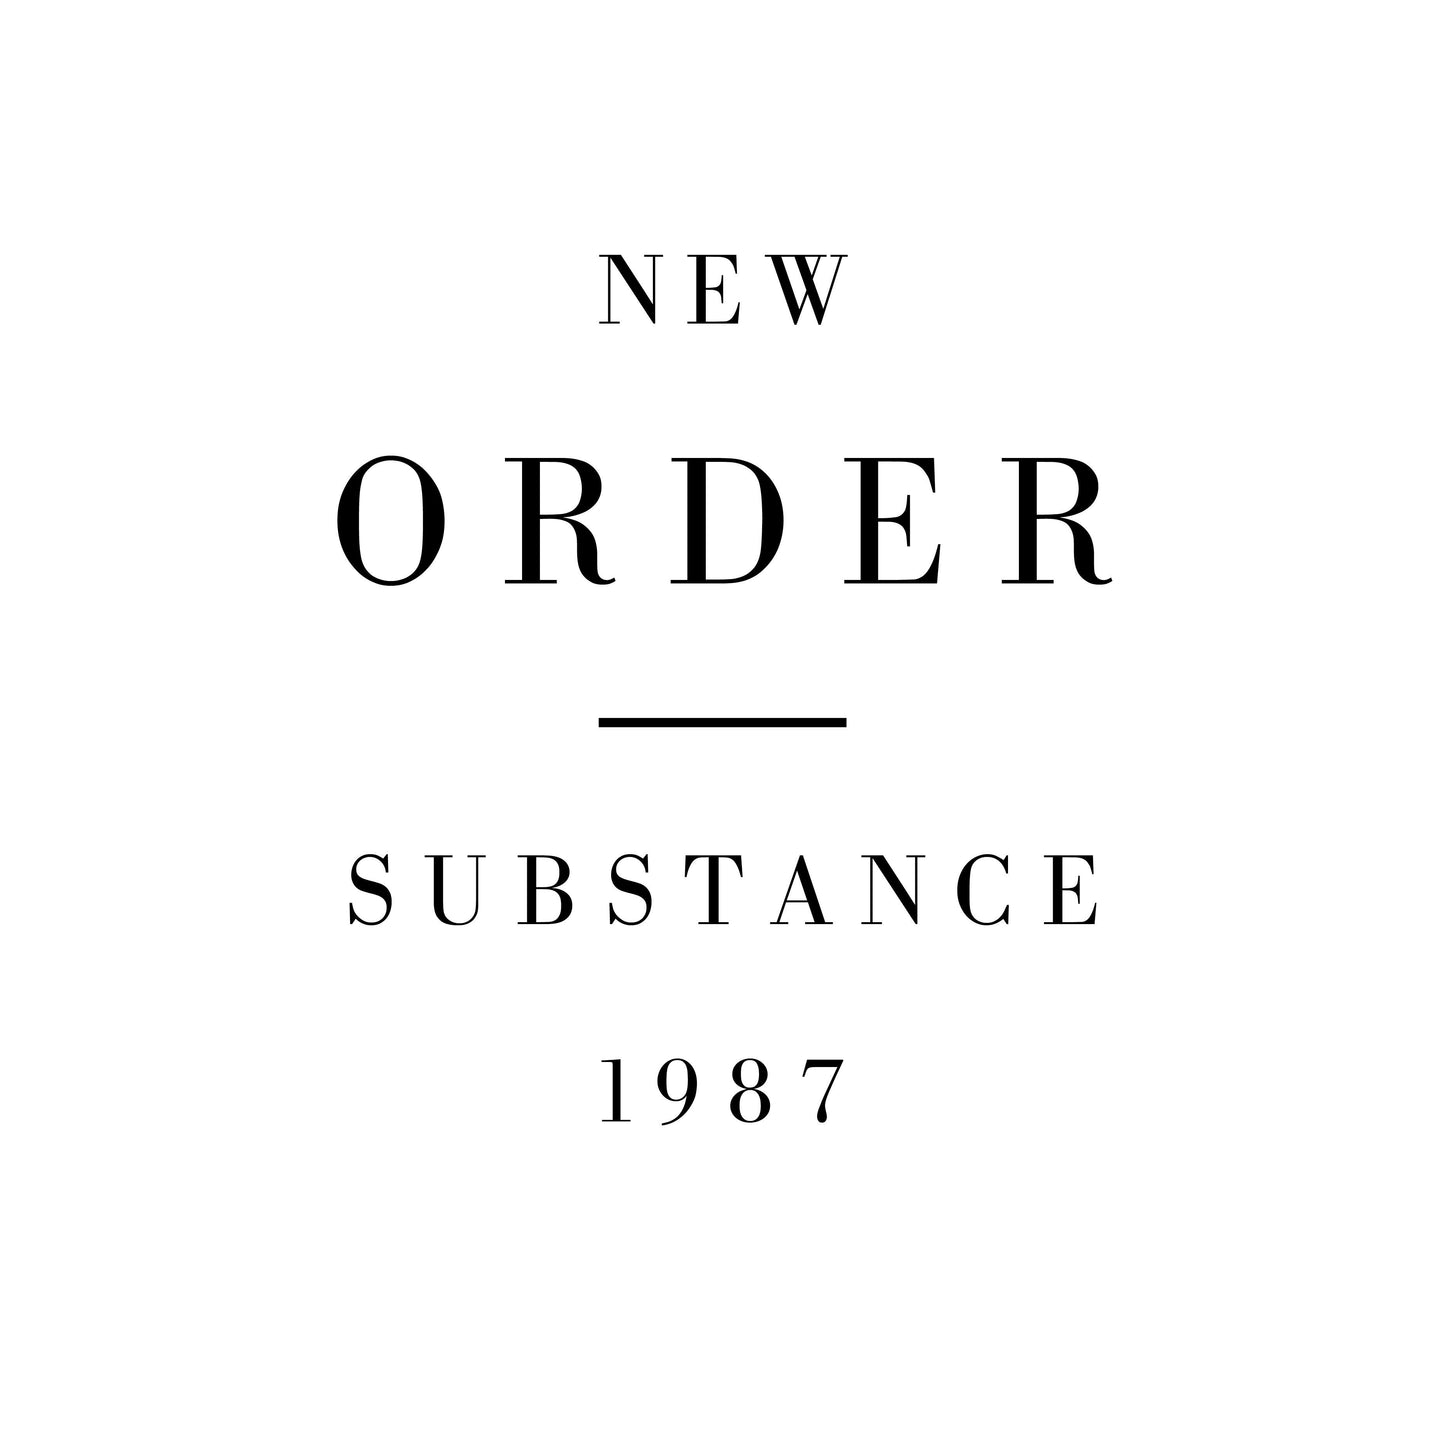 New Order Substance '87